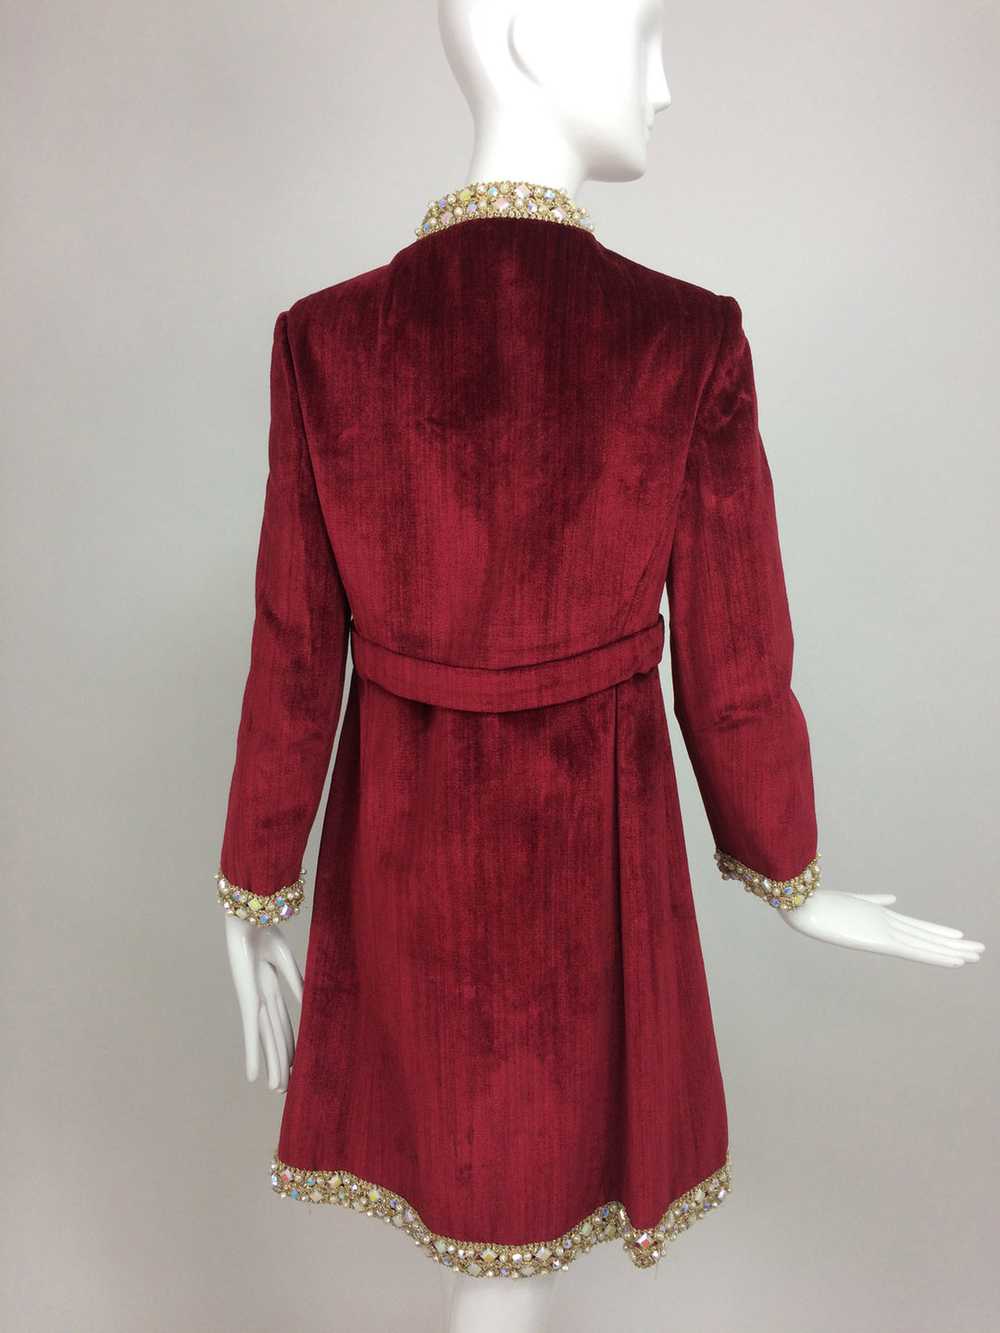 Garnet Red Silky Cotton Velvet Jewel Trim Mod Dre… - image 6